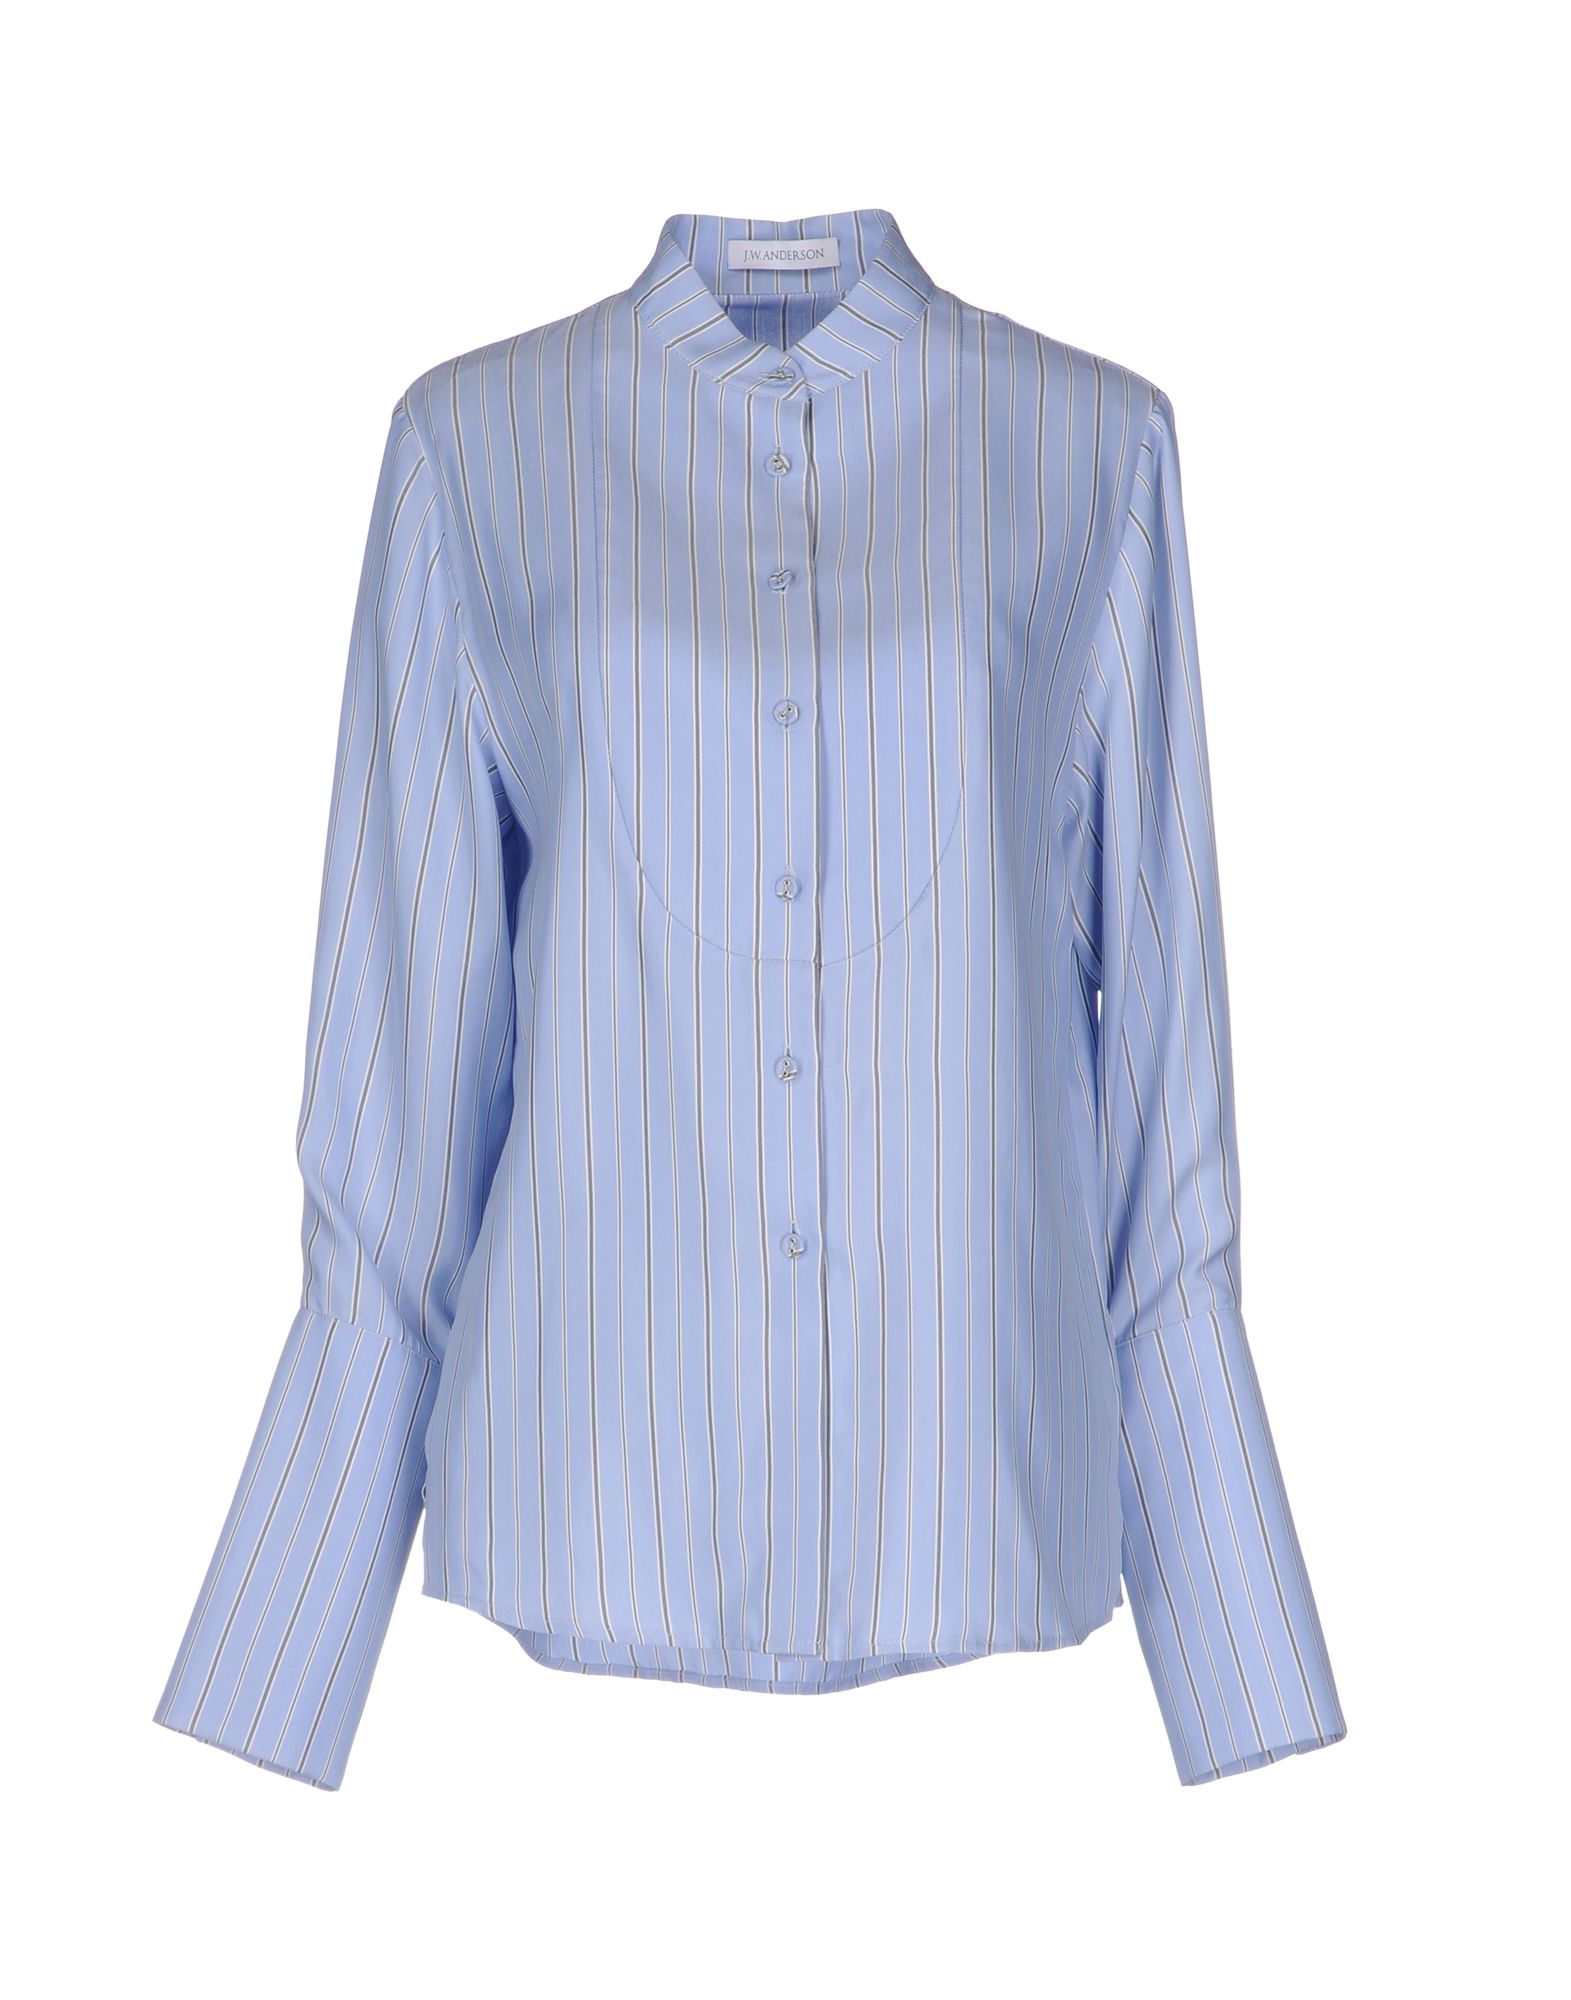 JW ANDERSON Silk shirts & blouses,38717880HD 4